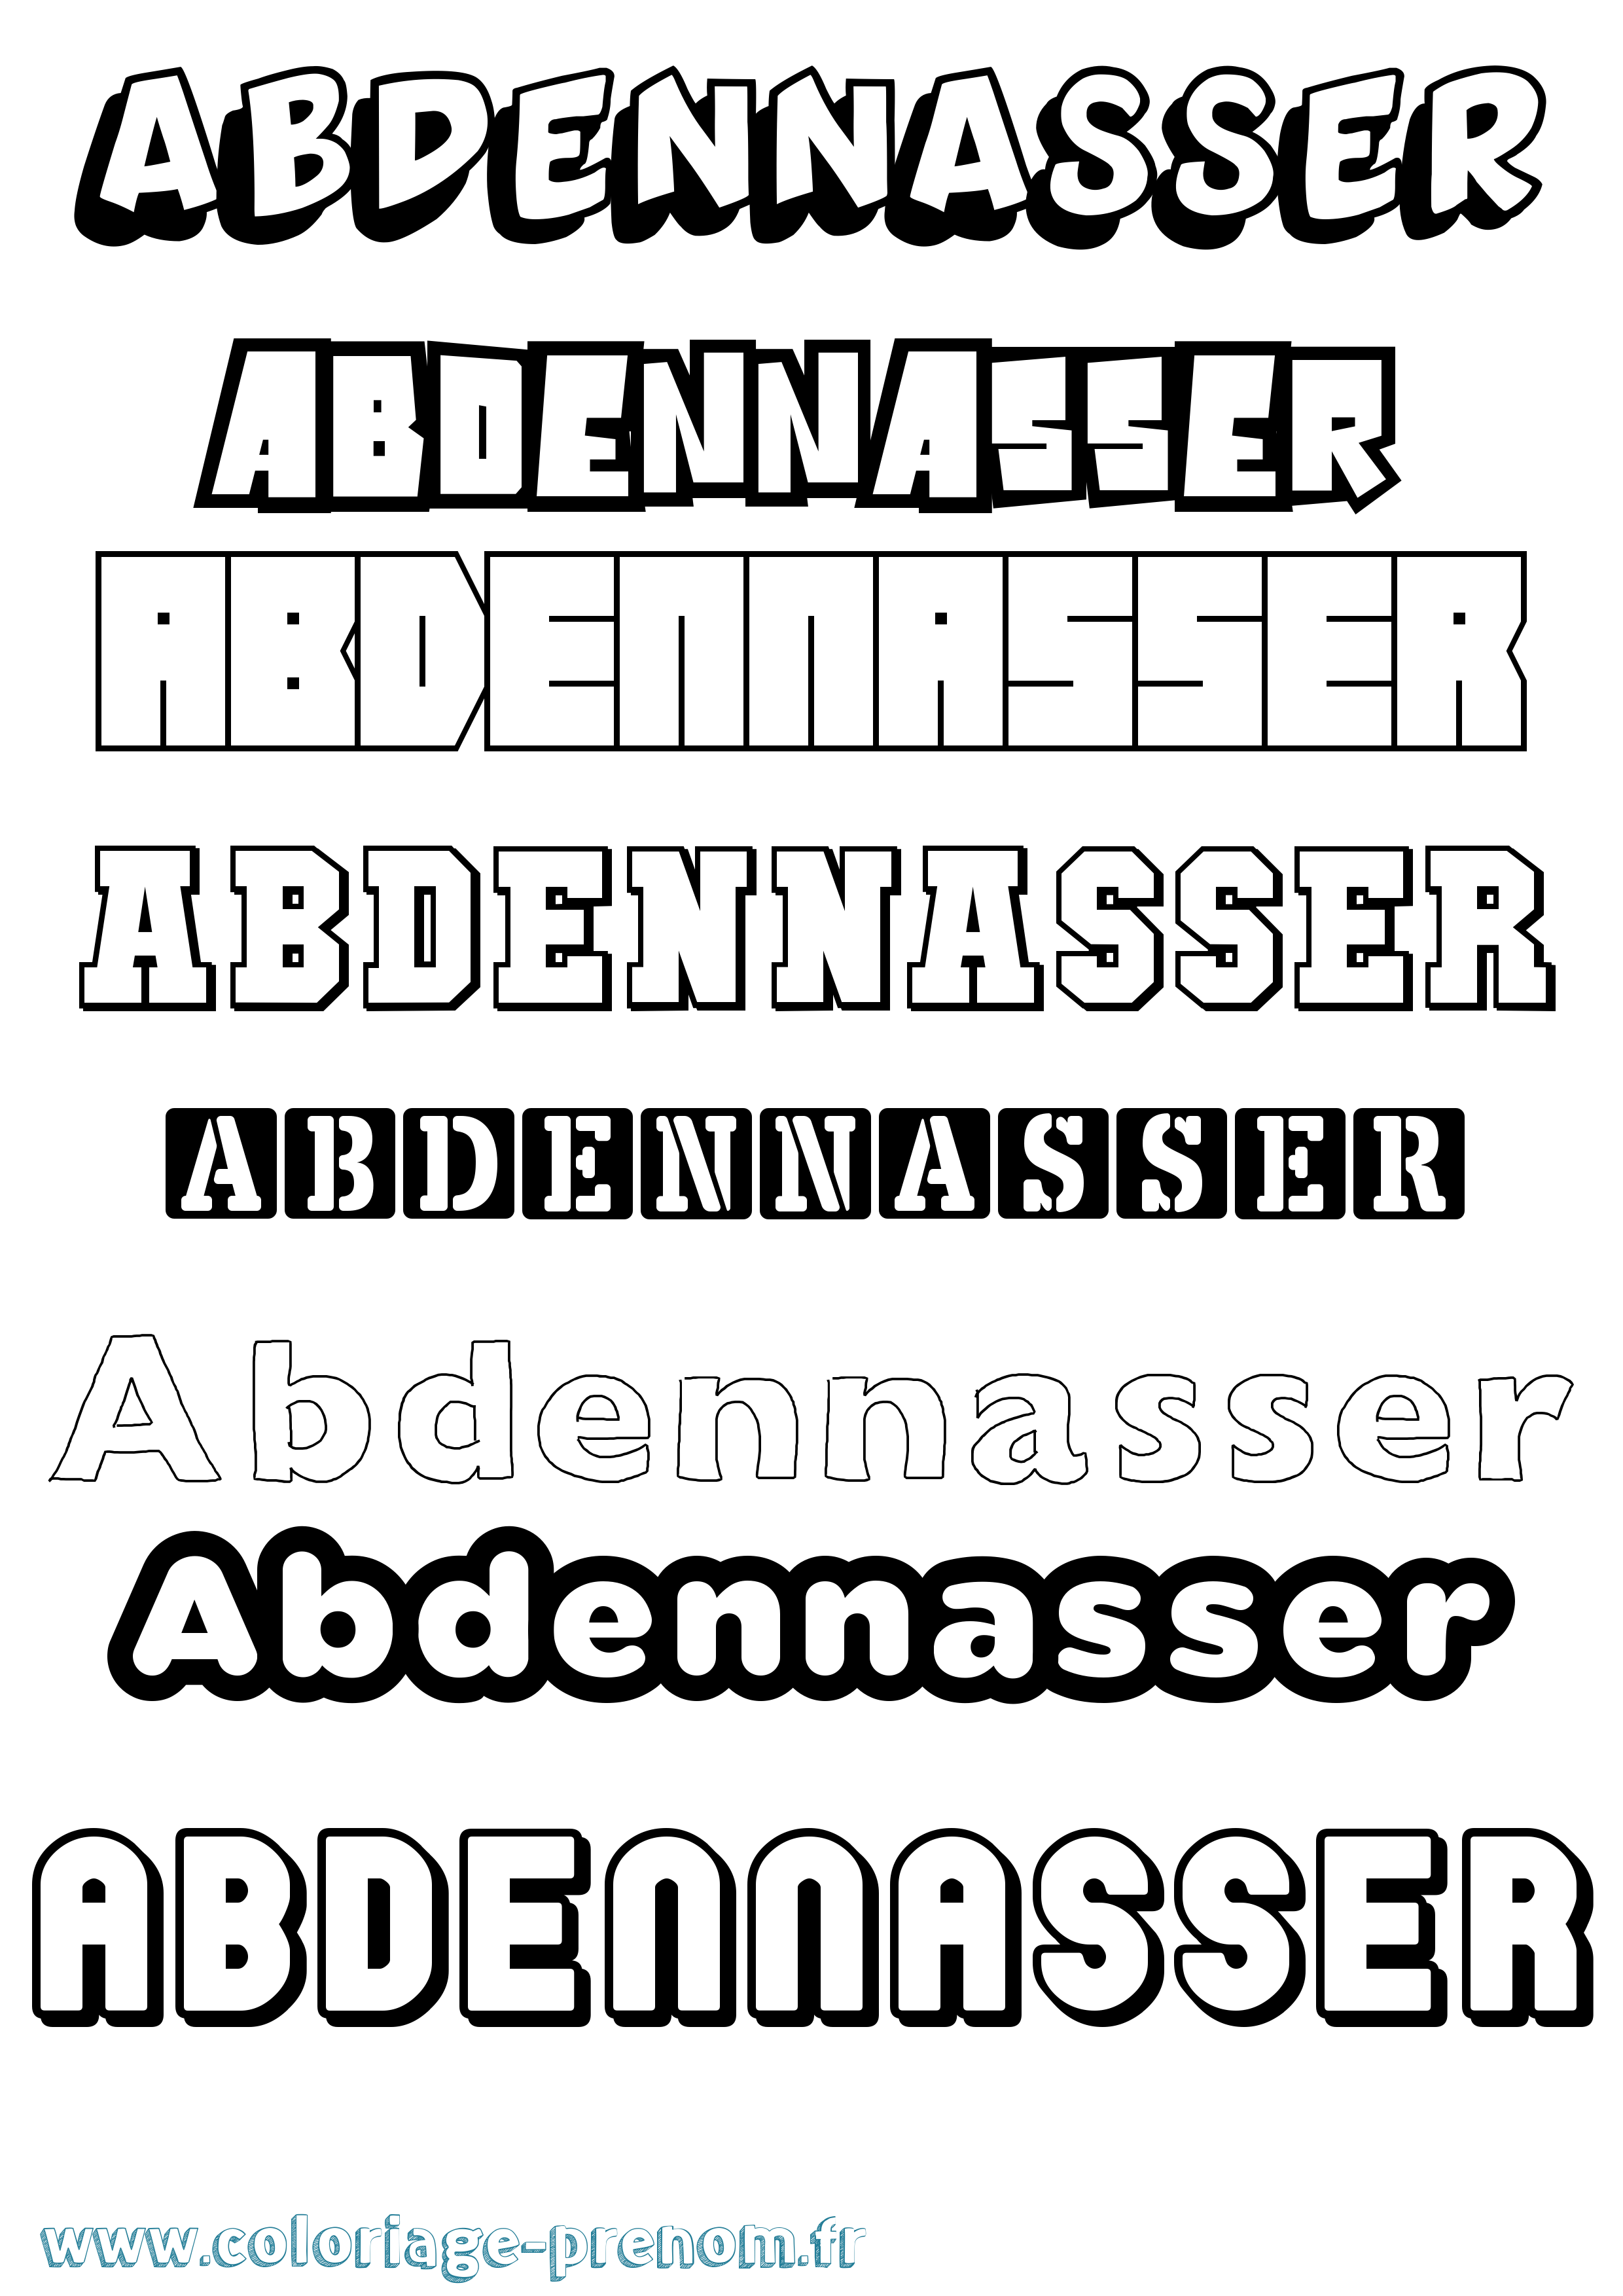 Coloriage prénom Abdennasser Simple